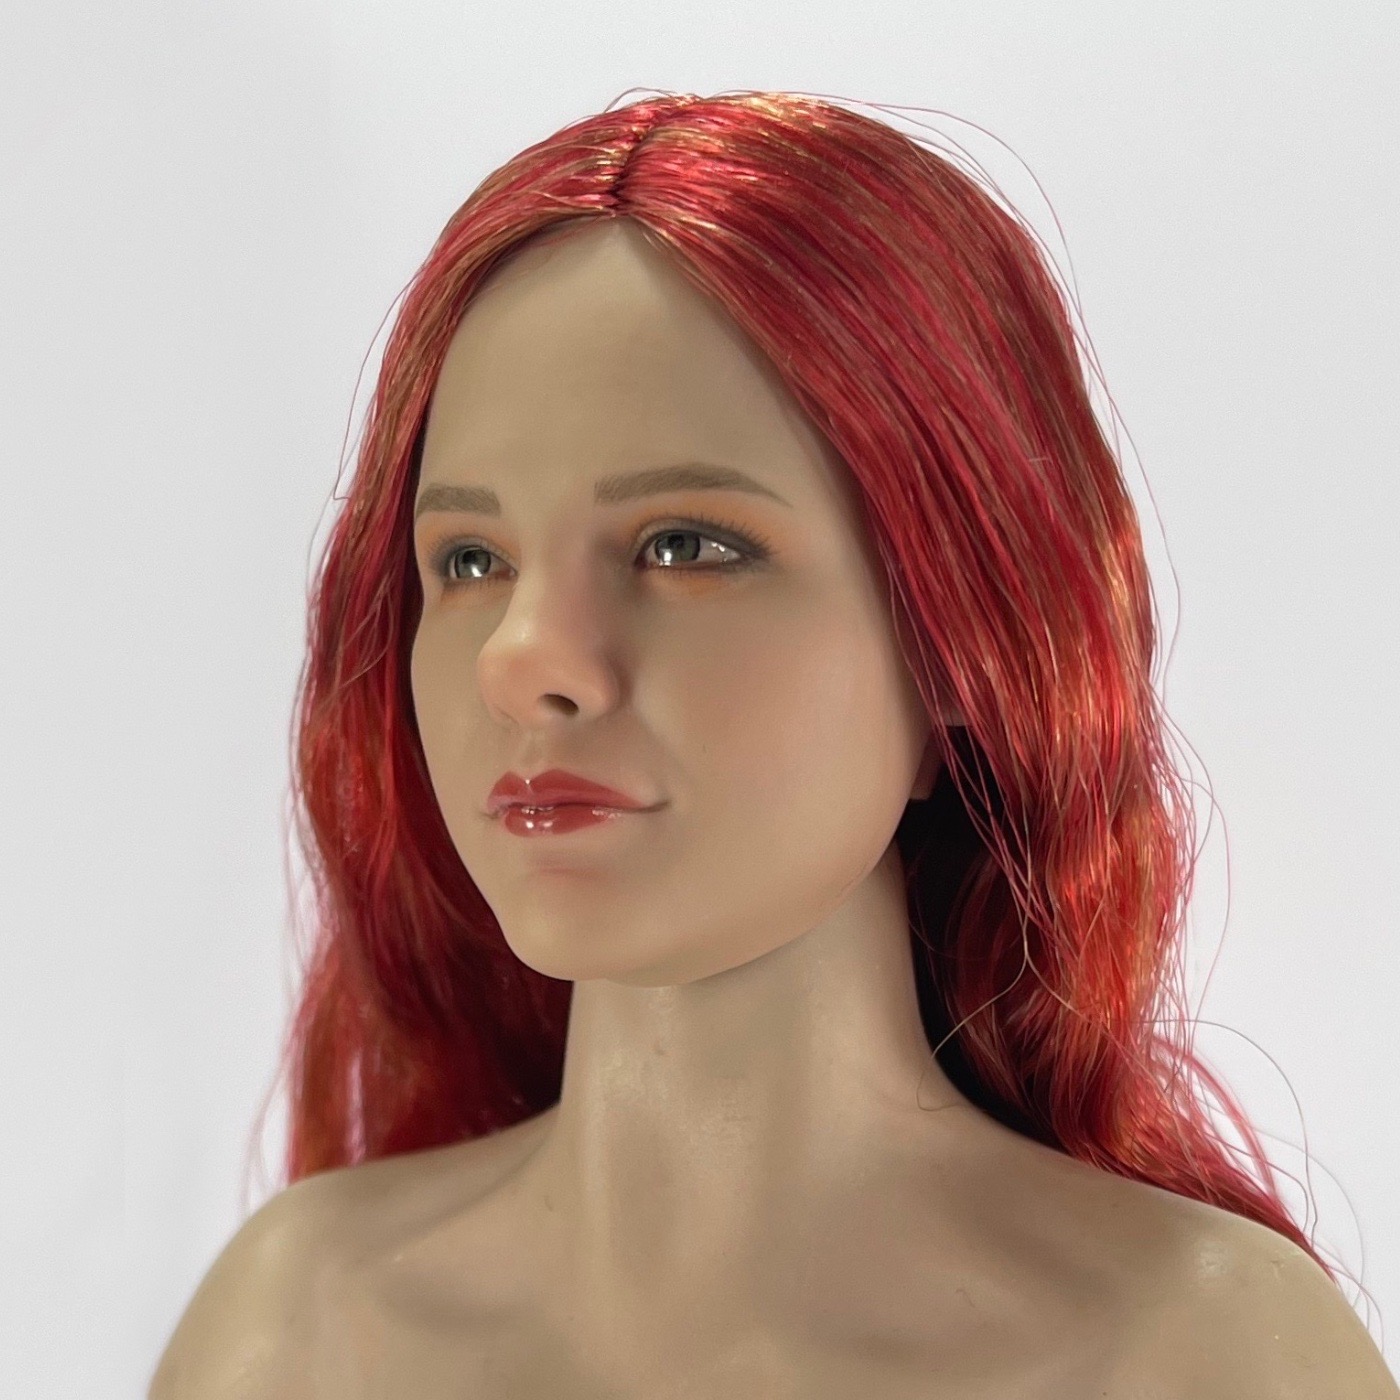 NEW PRODUCT: SUPER DUCK SDH036 1/6 Scale Female head sculpt in 4 styles 52860116643_3d0fe88b7d_o